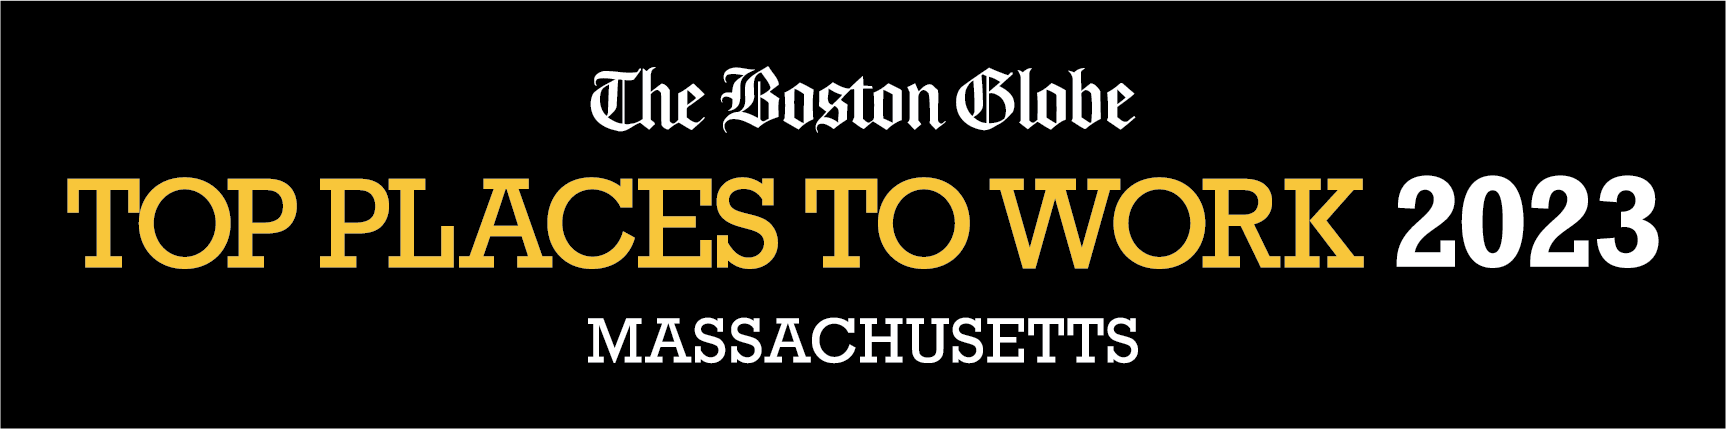 The Boston Globe: Top Places to Work 2023 Massachusetts